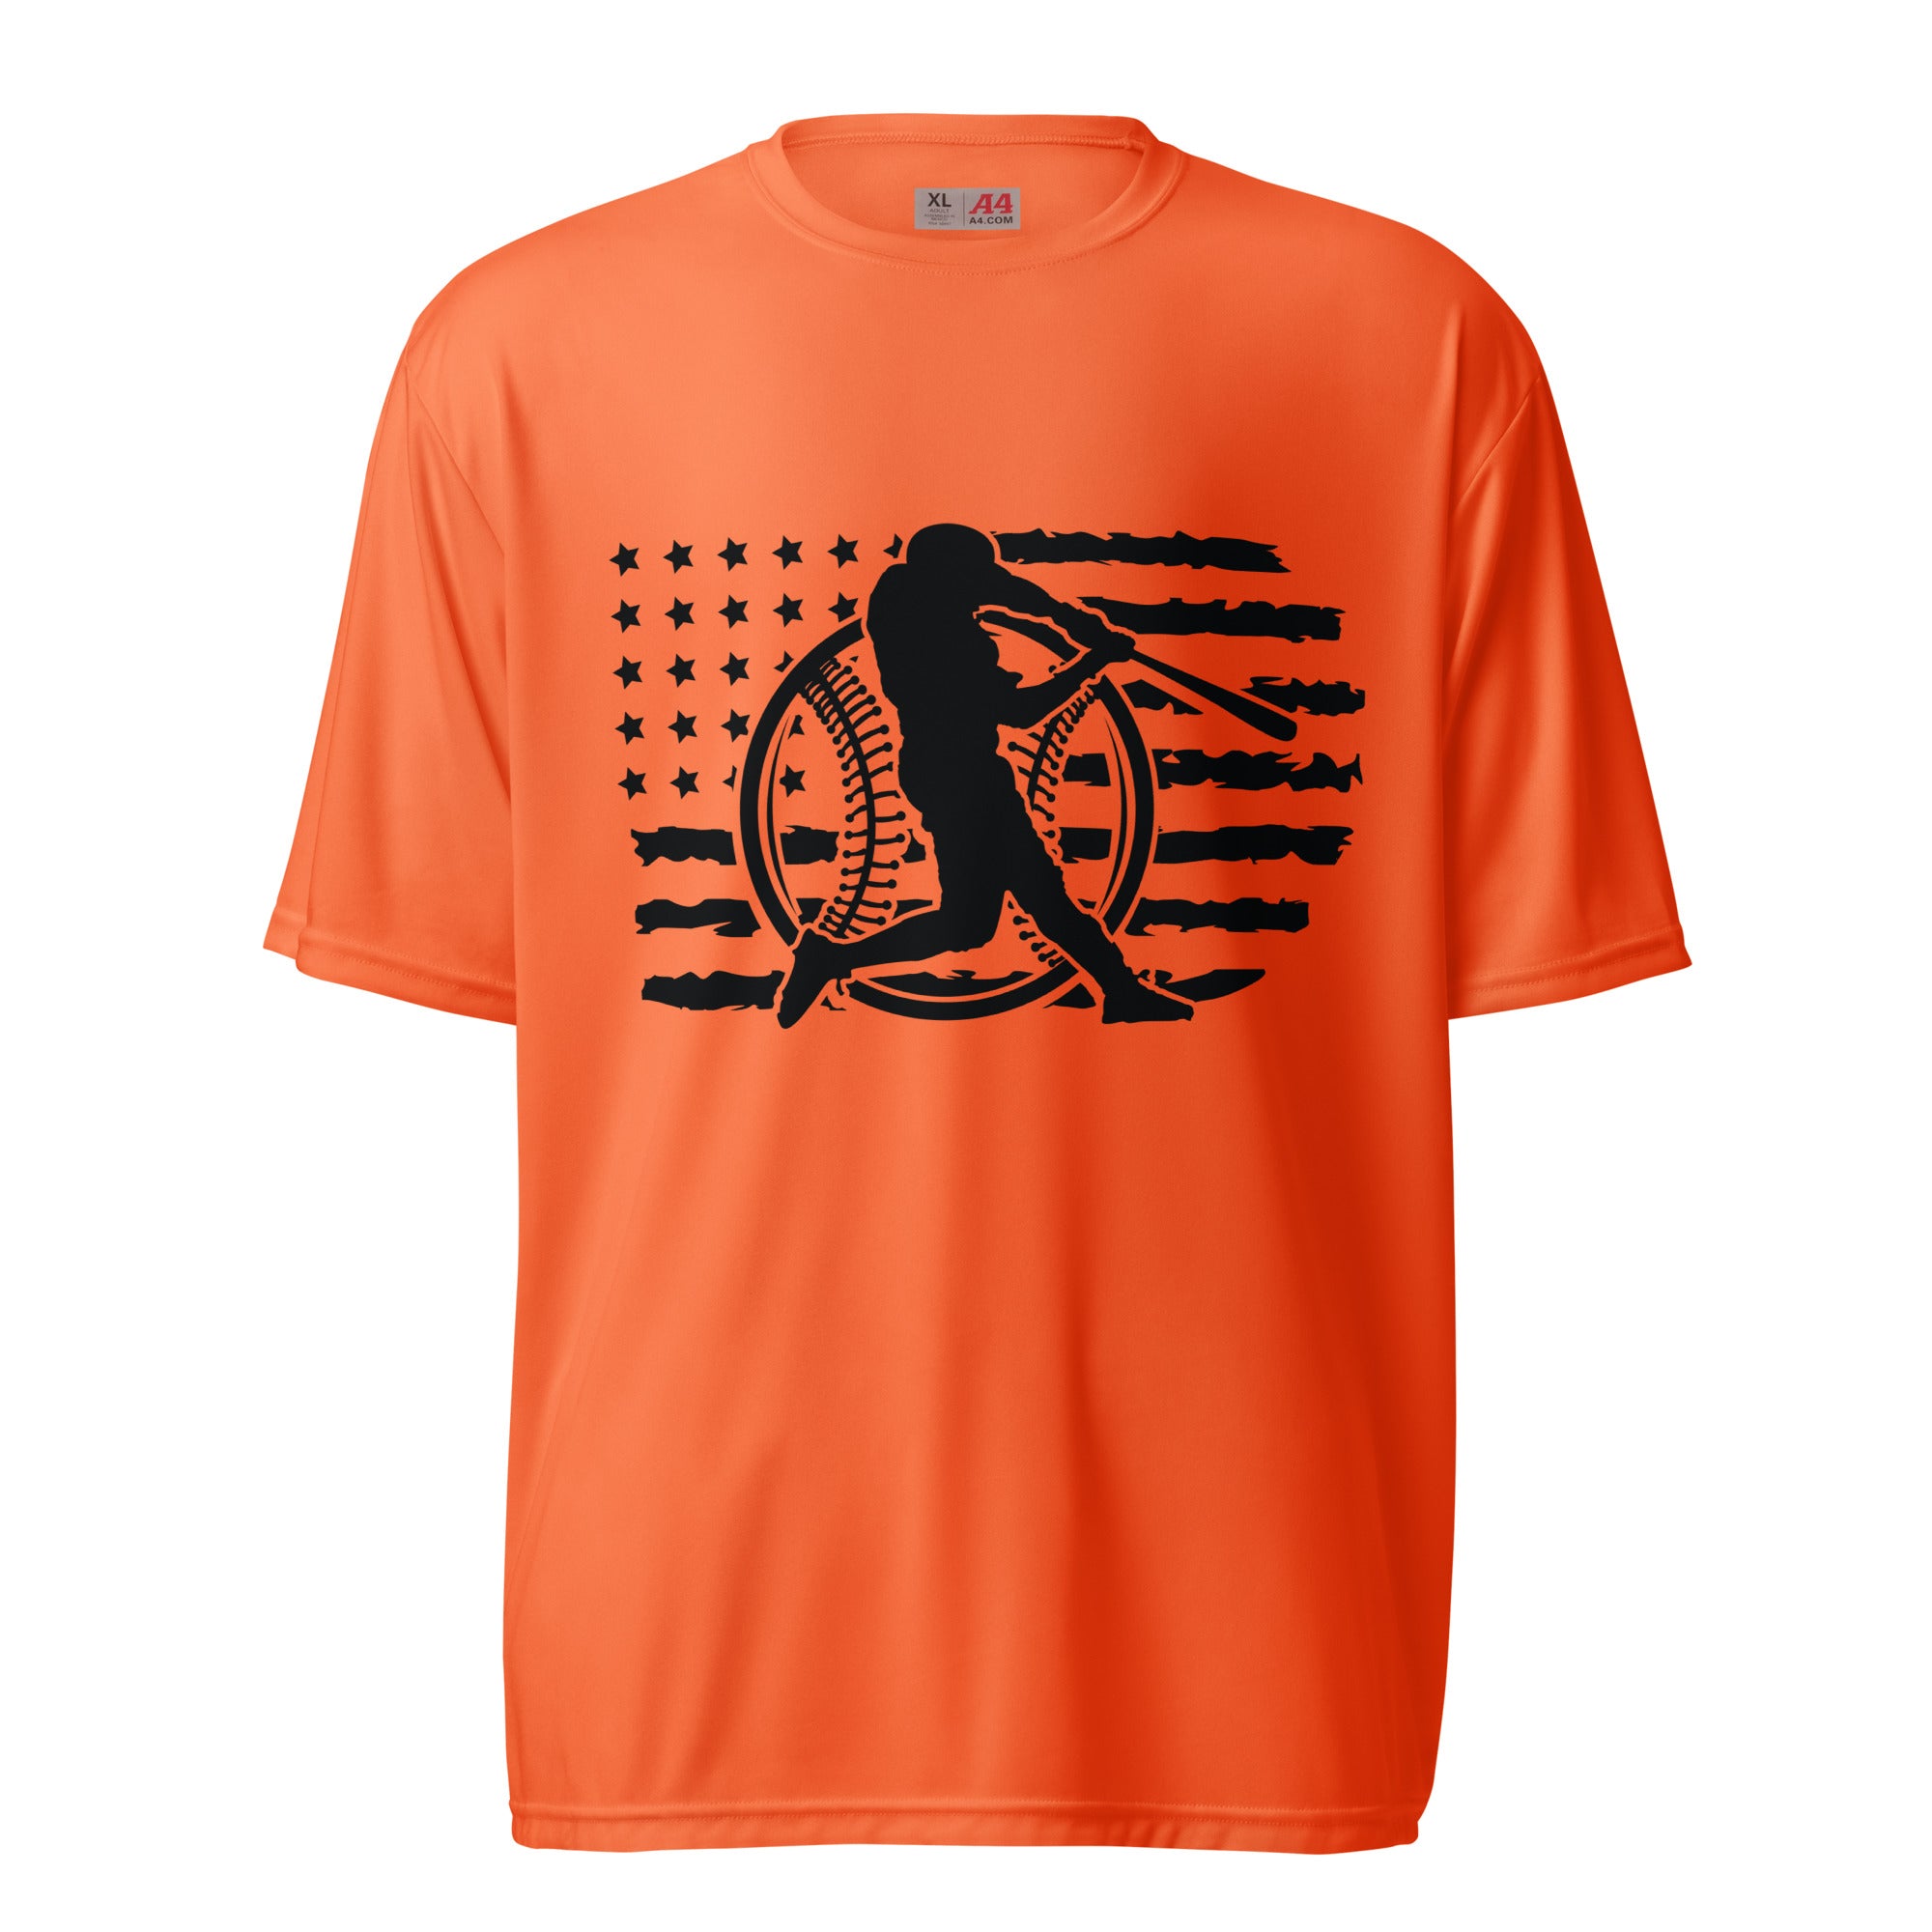 Drippy Baseball Tee Shirt - Showcase Your Swag